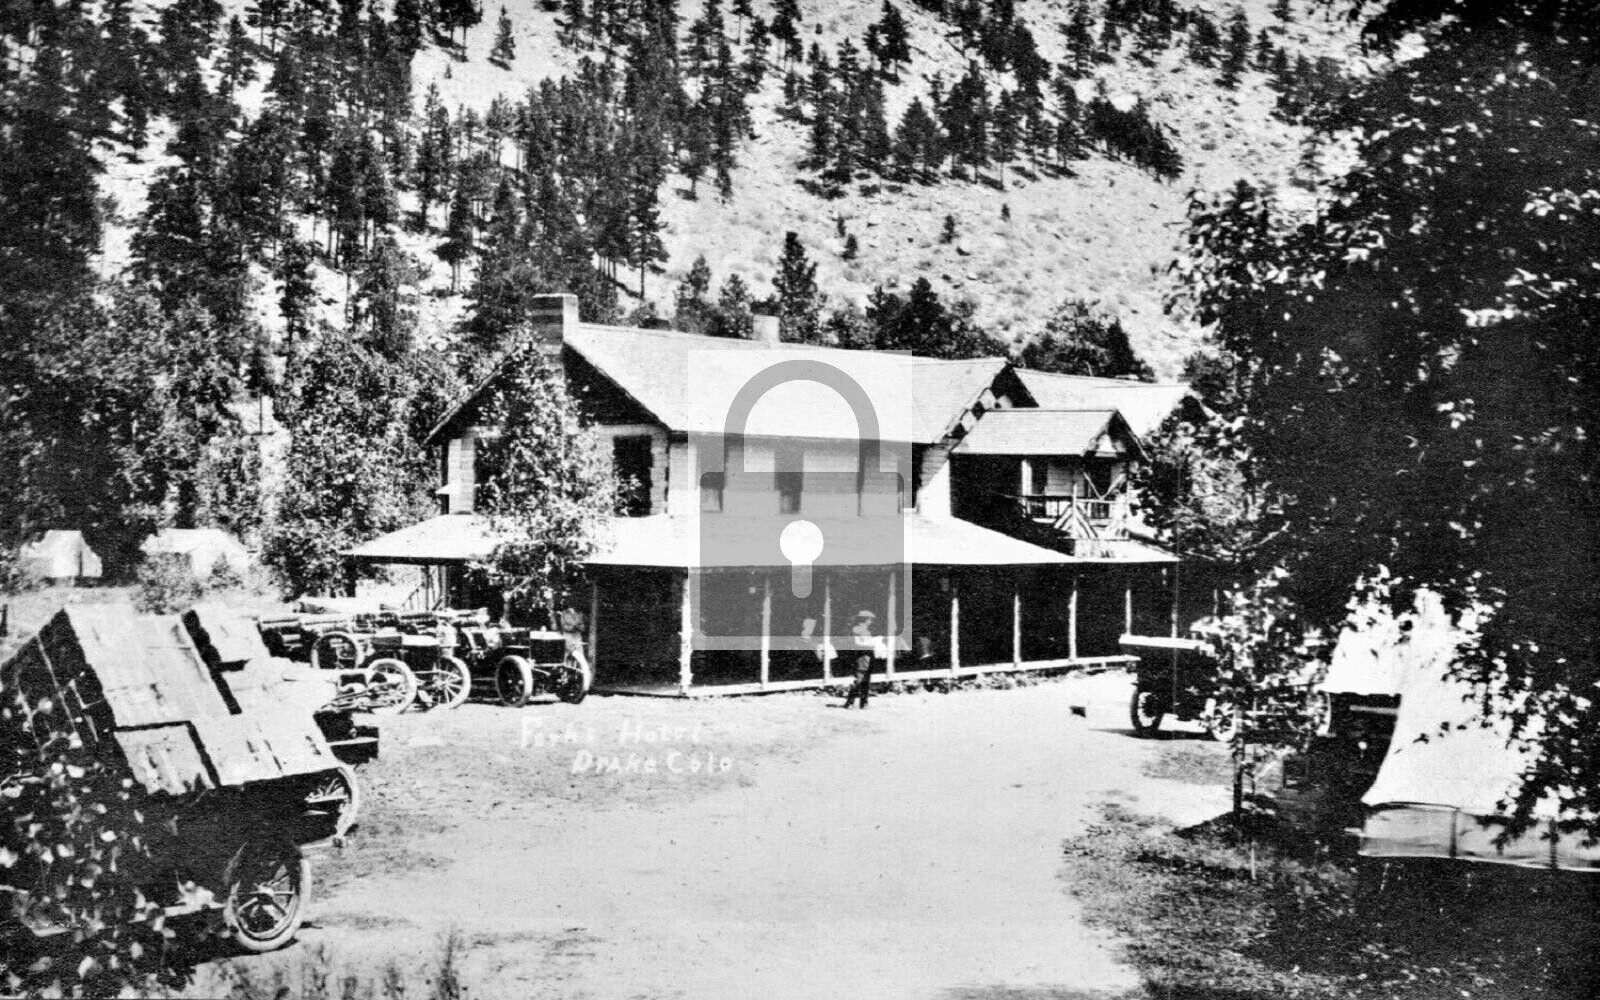 Forks Hotel Drake Colorado CO - 4x6 Reprint